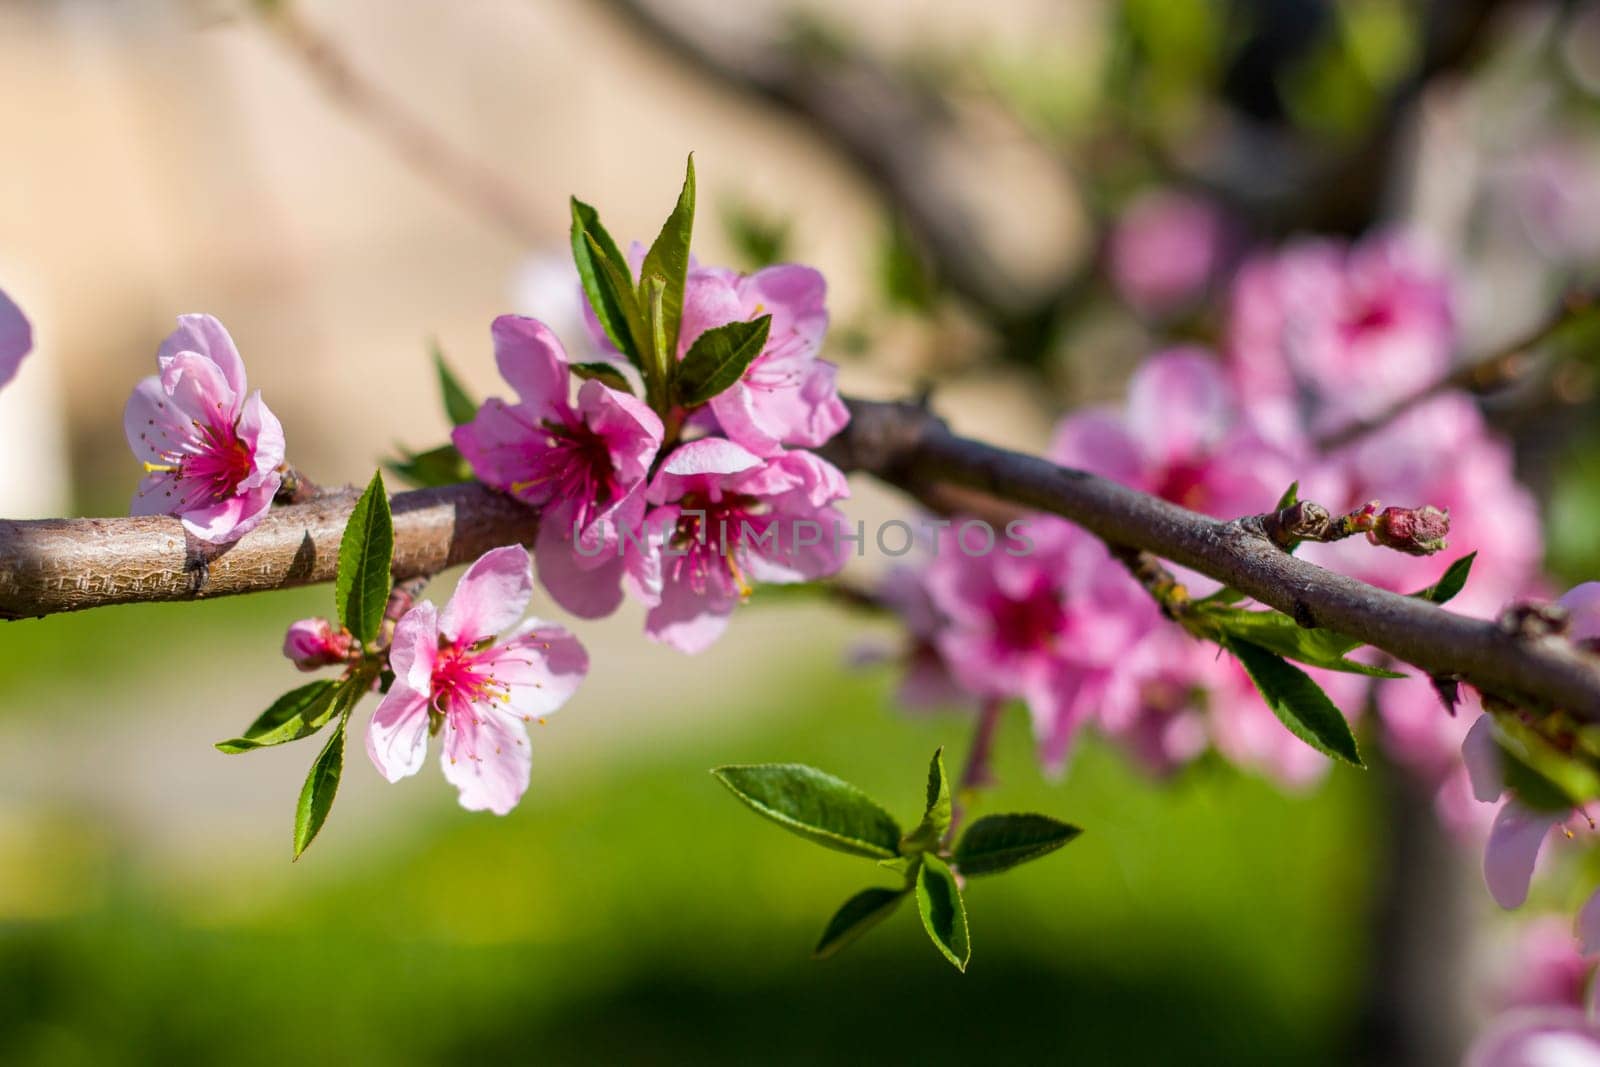 nectarine peach blossom on branch spring tree by romvo